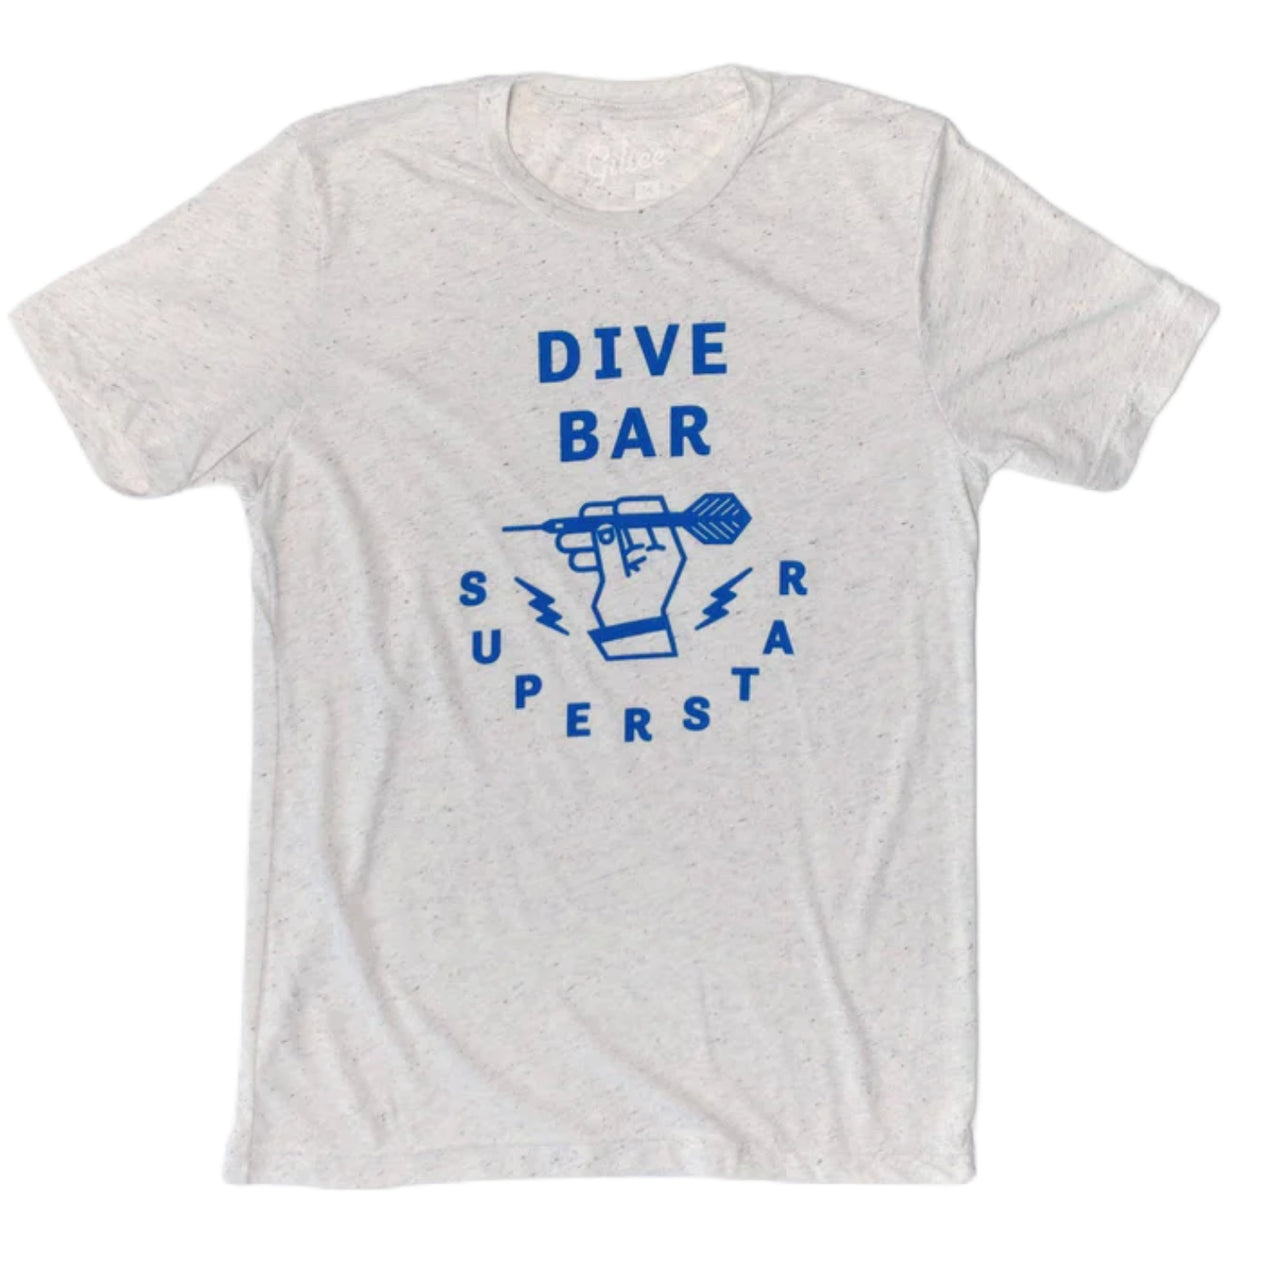 Dive Bar Super Star Tee